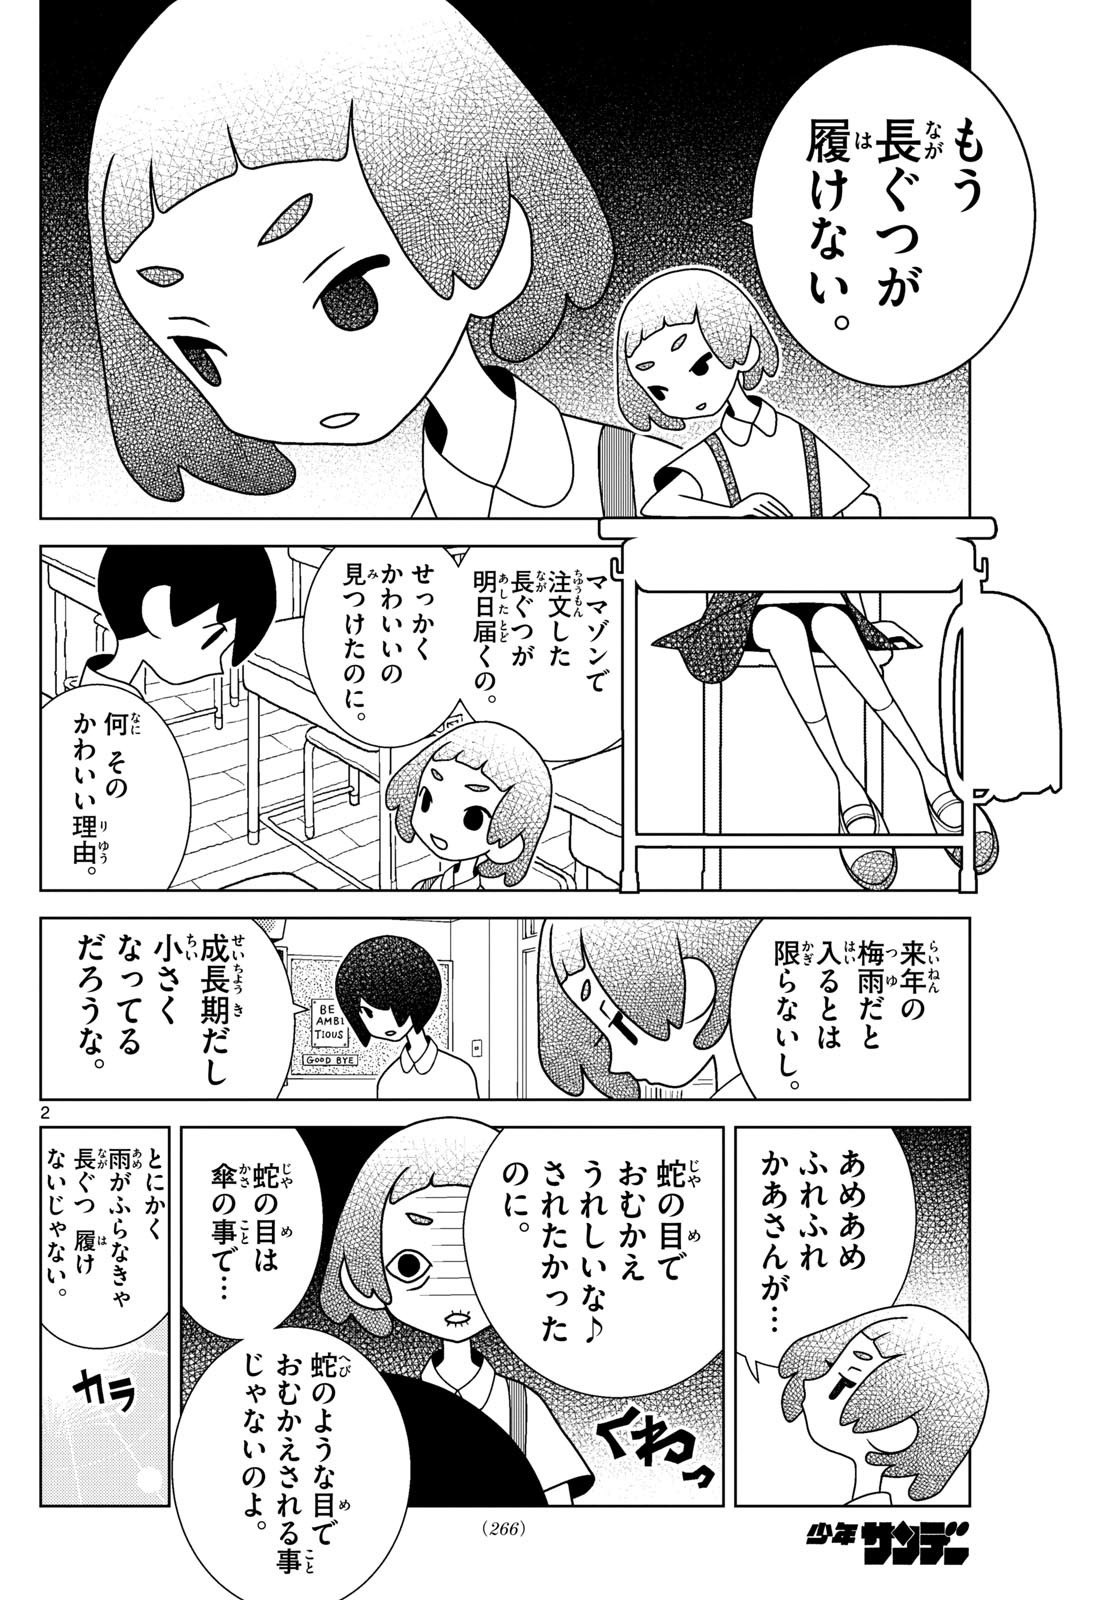 Shibuya Near Family - Chapter 065 - Page 2